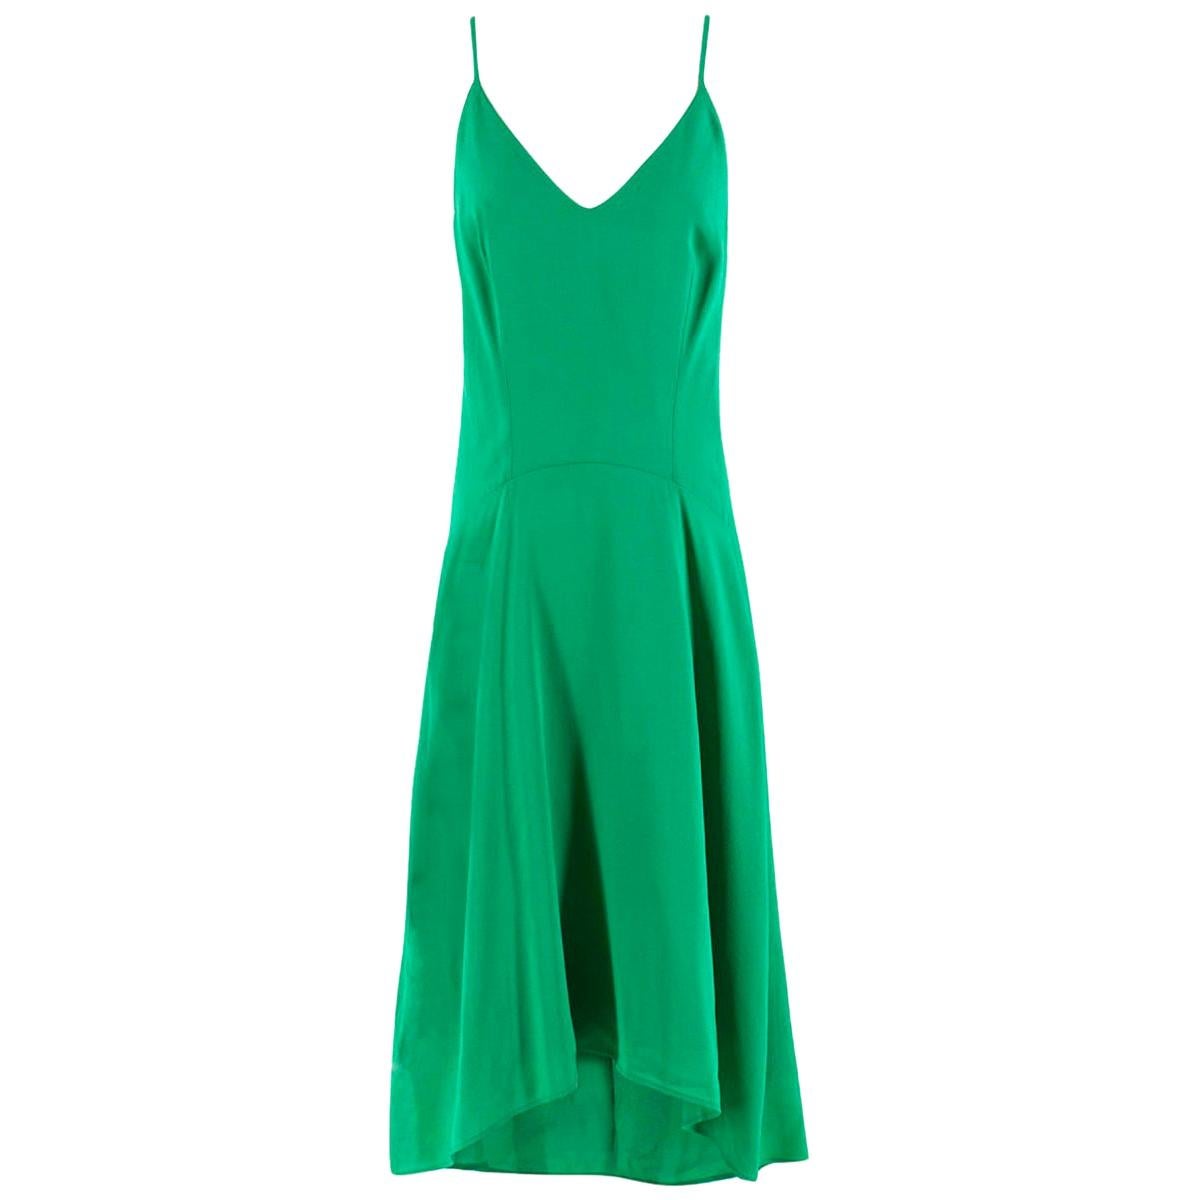 Balenciaga Green Silk-Crepe Dress - Size US 0